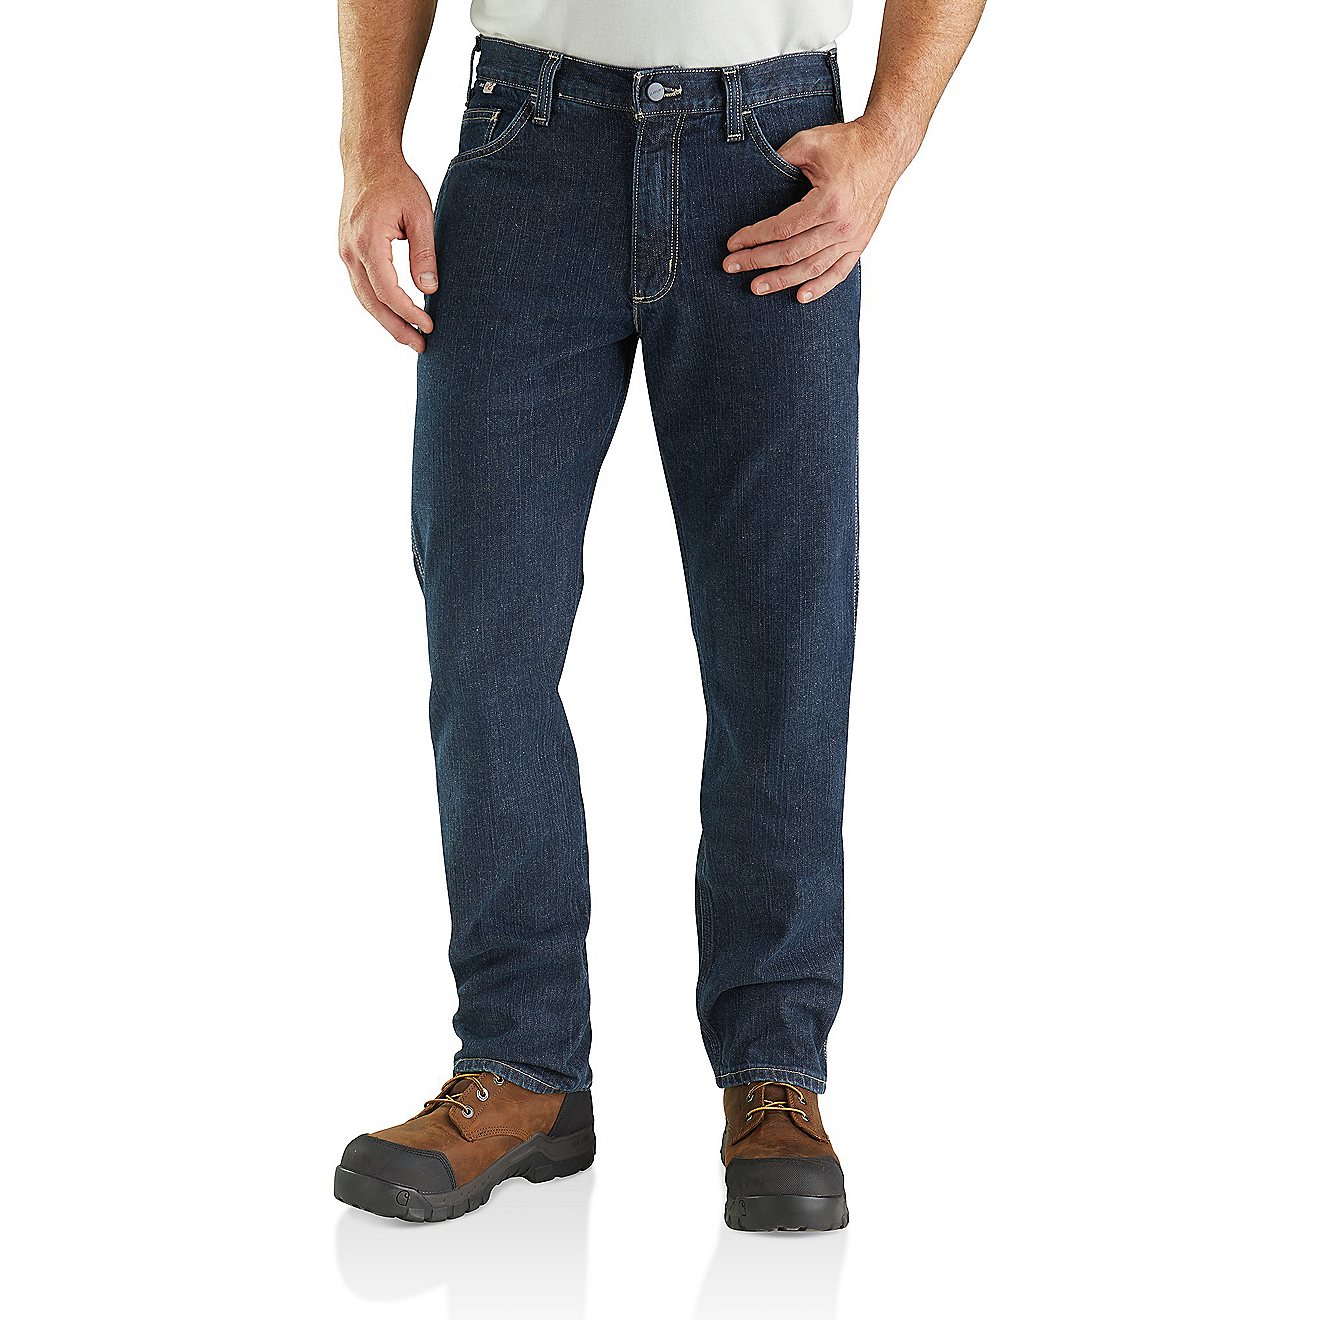 Carhartt Men's FR Rugged Flex Jeans | Free Shipping at Academy